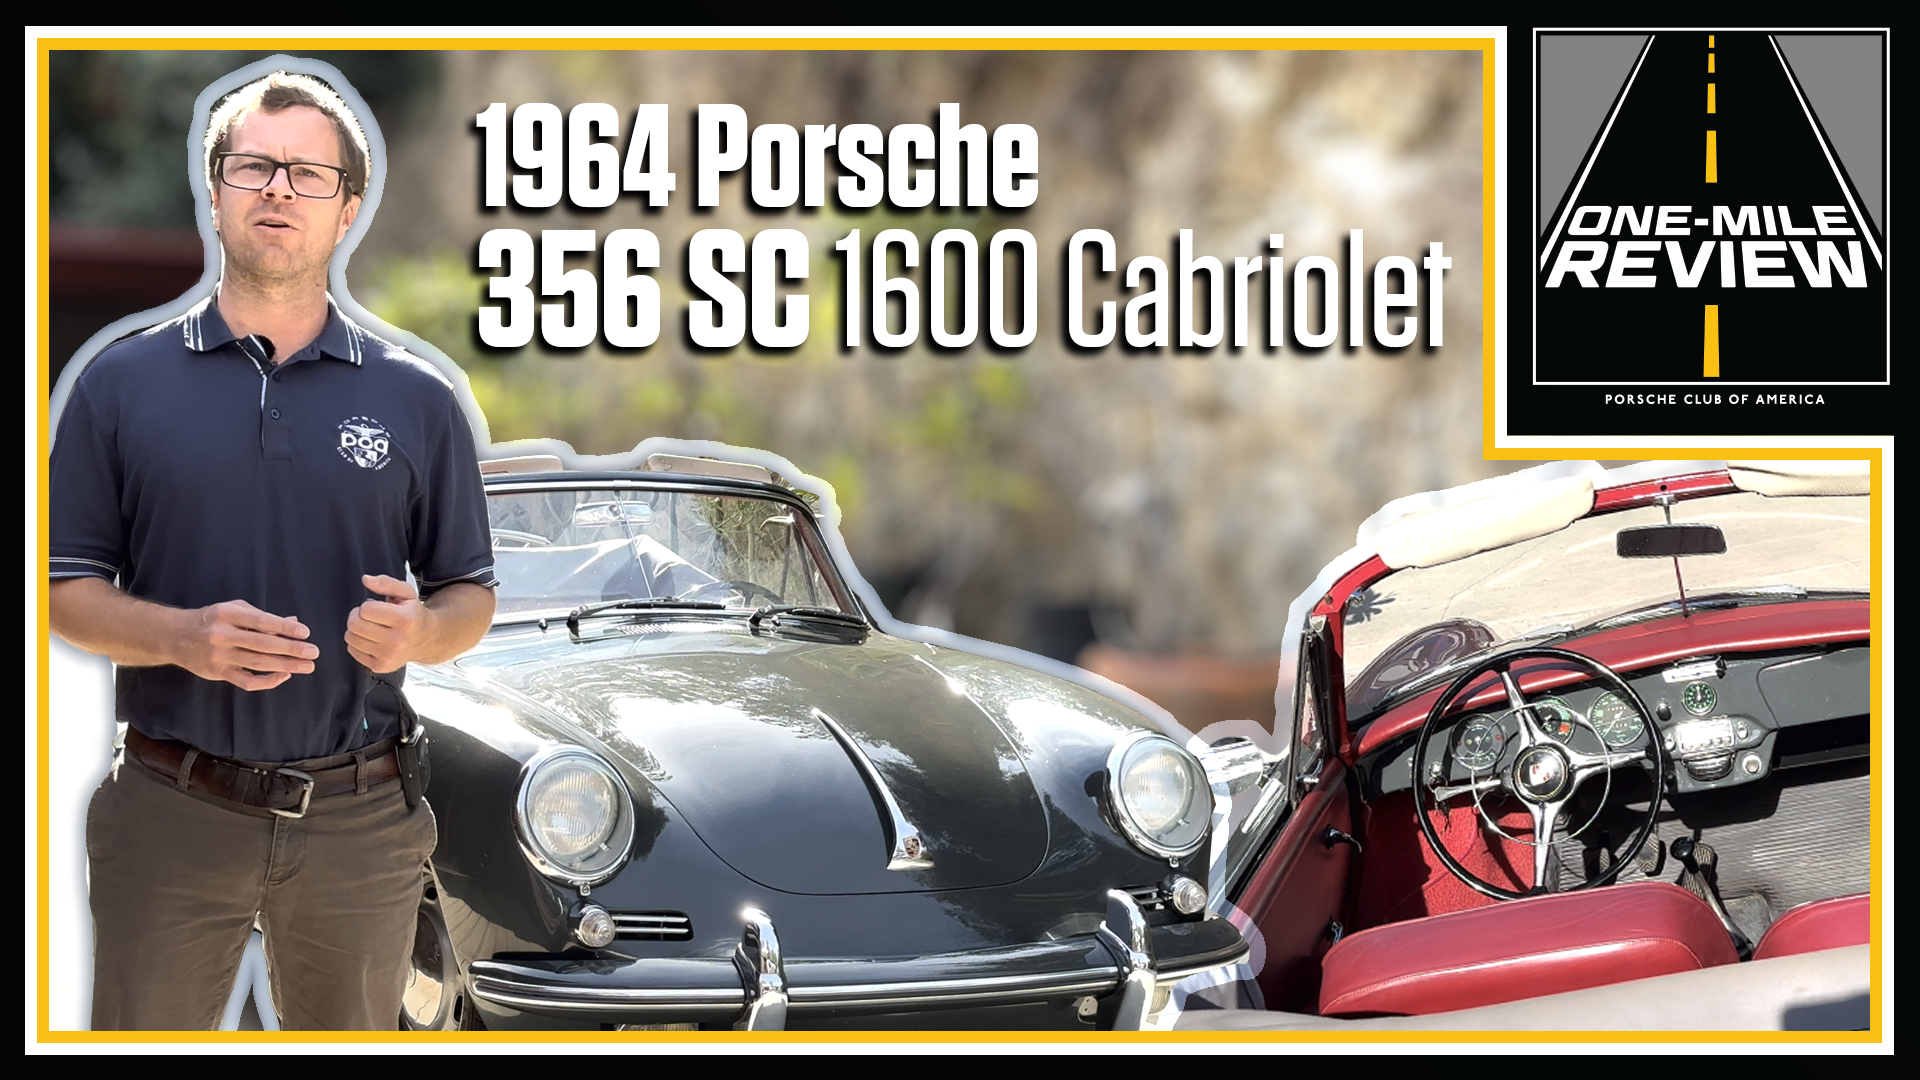 Porsche Club of America - 1964 Porsche 356 SC 1600 Cabriolet: Comfortable & easy to drive! | One-Mile Review